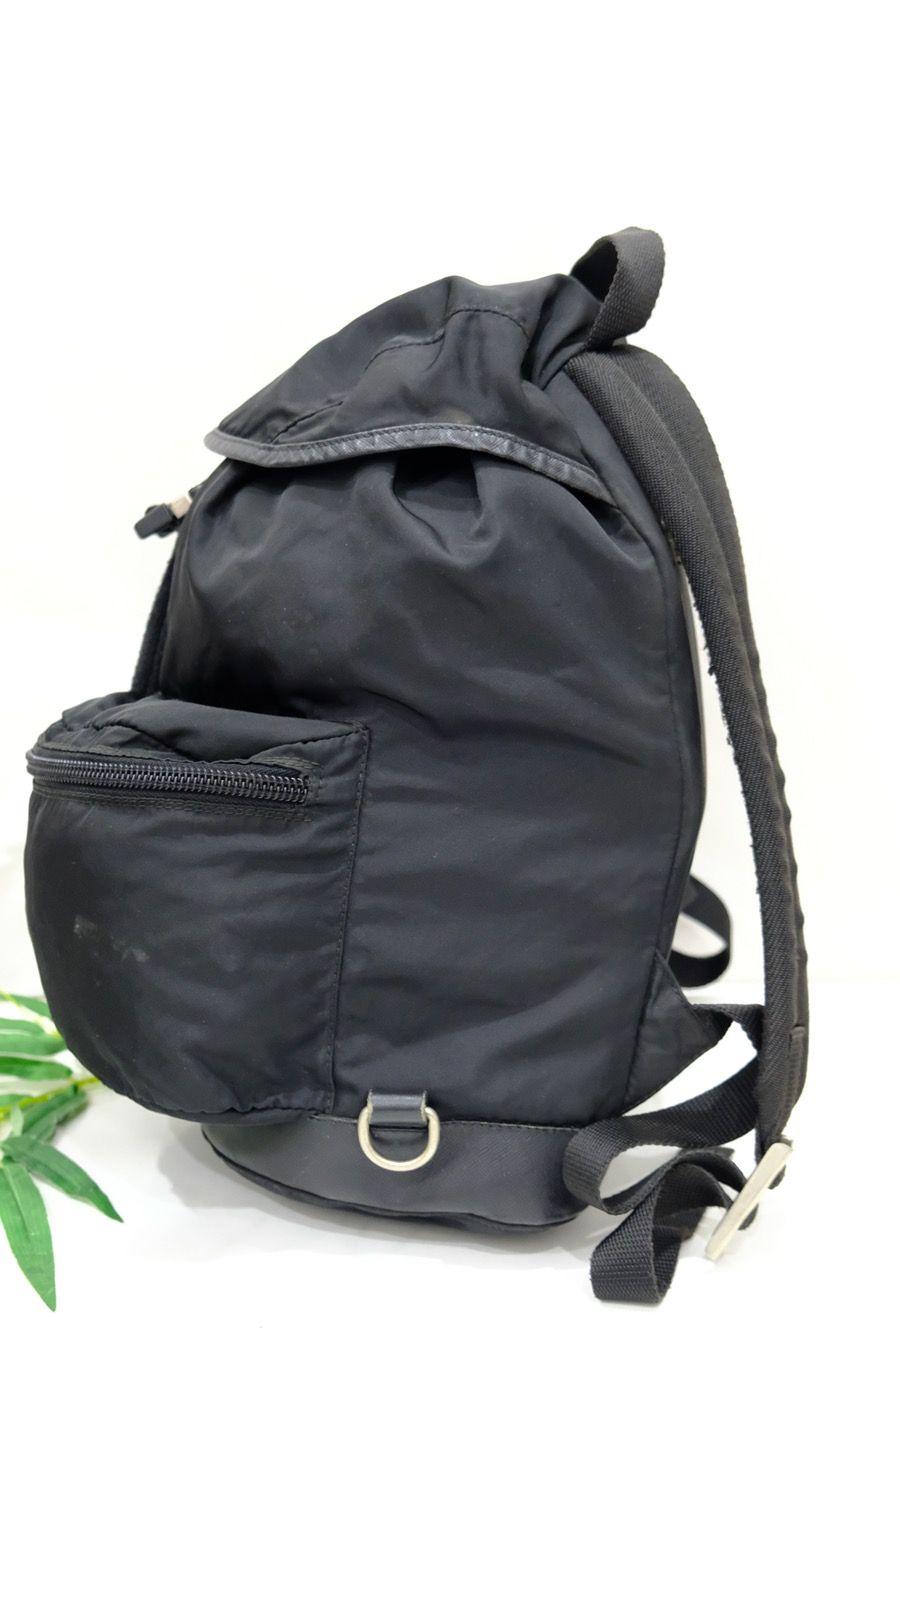 Authentic prada backpack Black Nylon Double pocket - 3